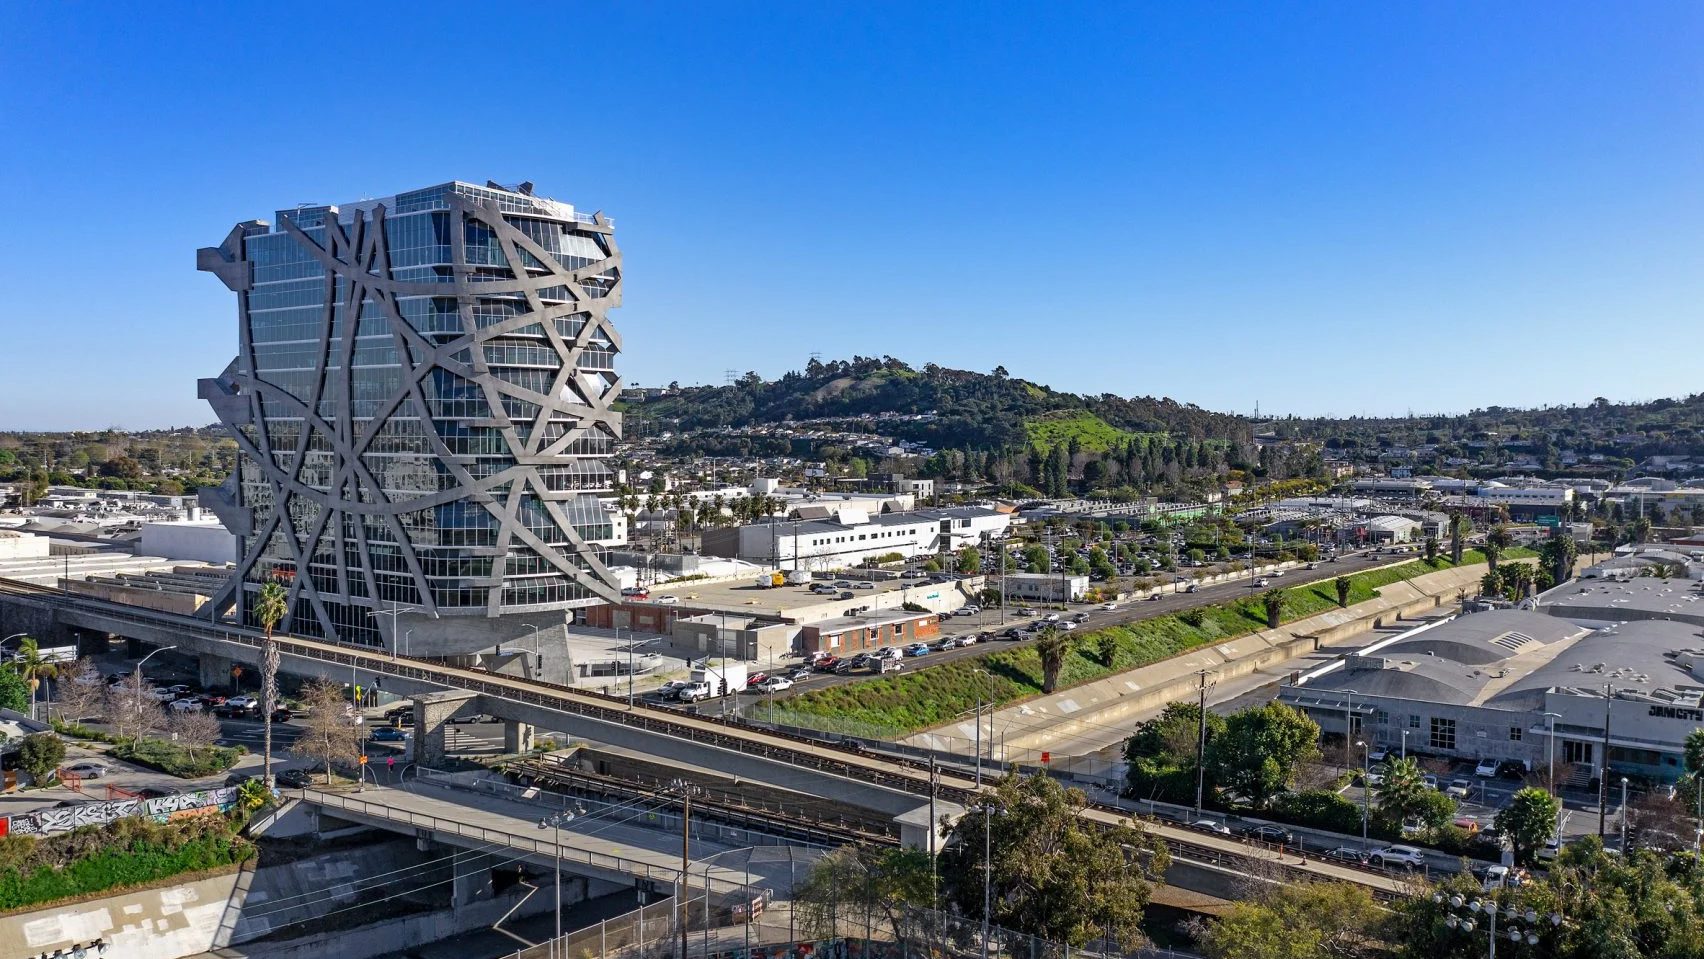 (W)rapper Tower in Los Angeles was designed by Eric Owen Moss.